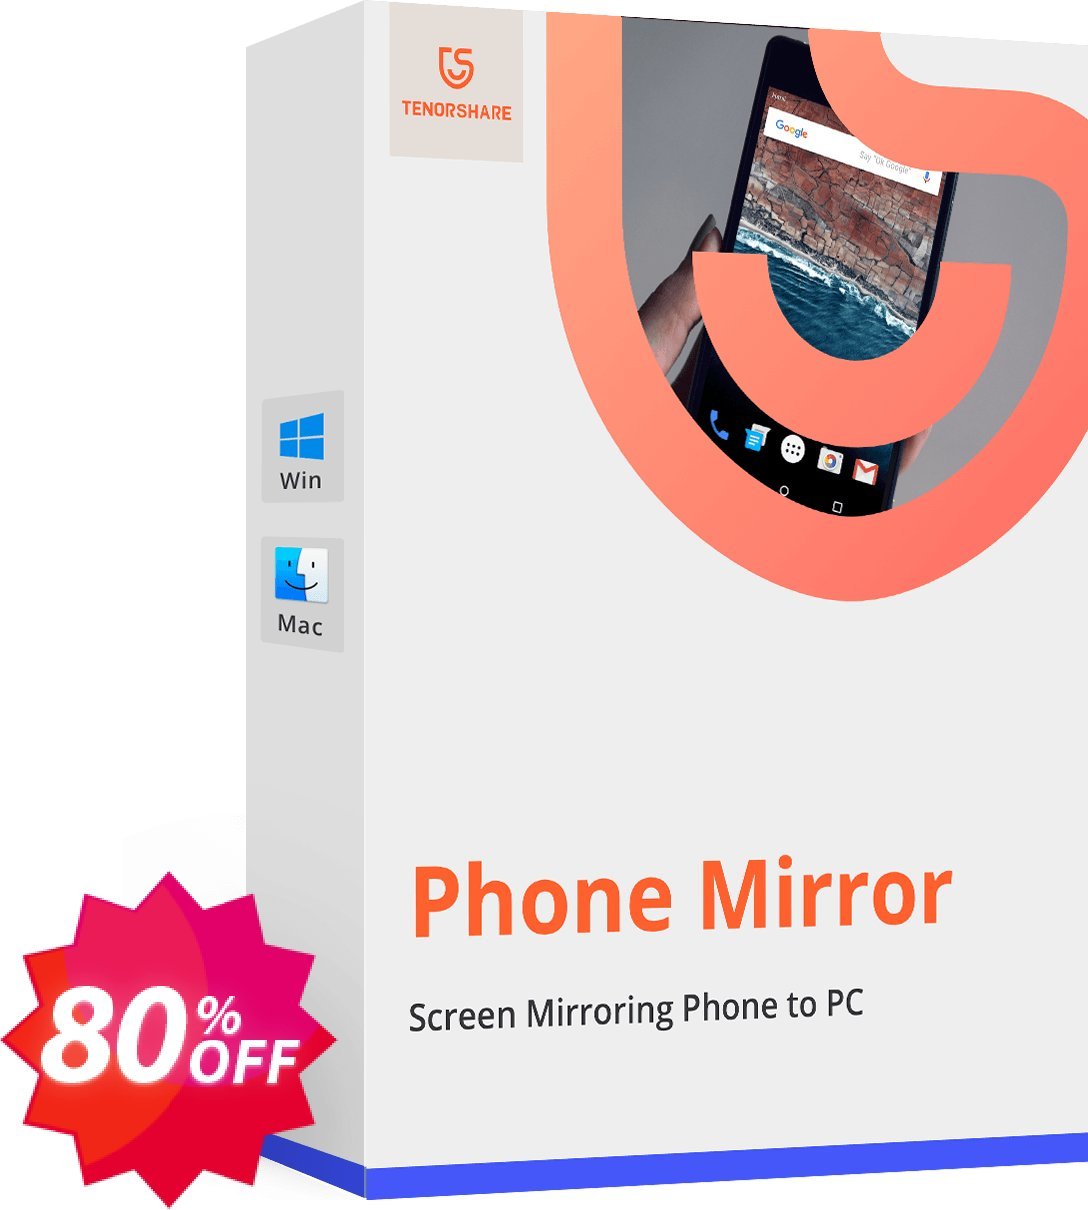 Tenorshare Phone Mirror for MAC, 1 Quarter  Coupon code 80% discount 